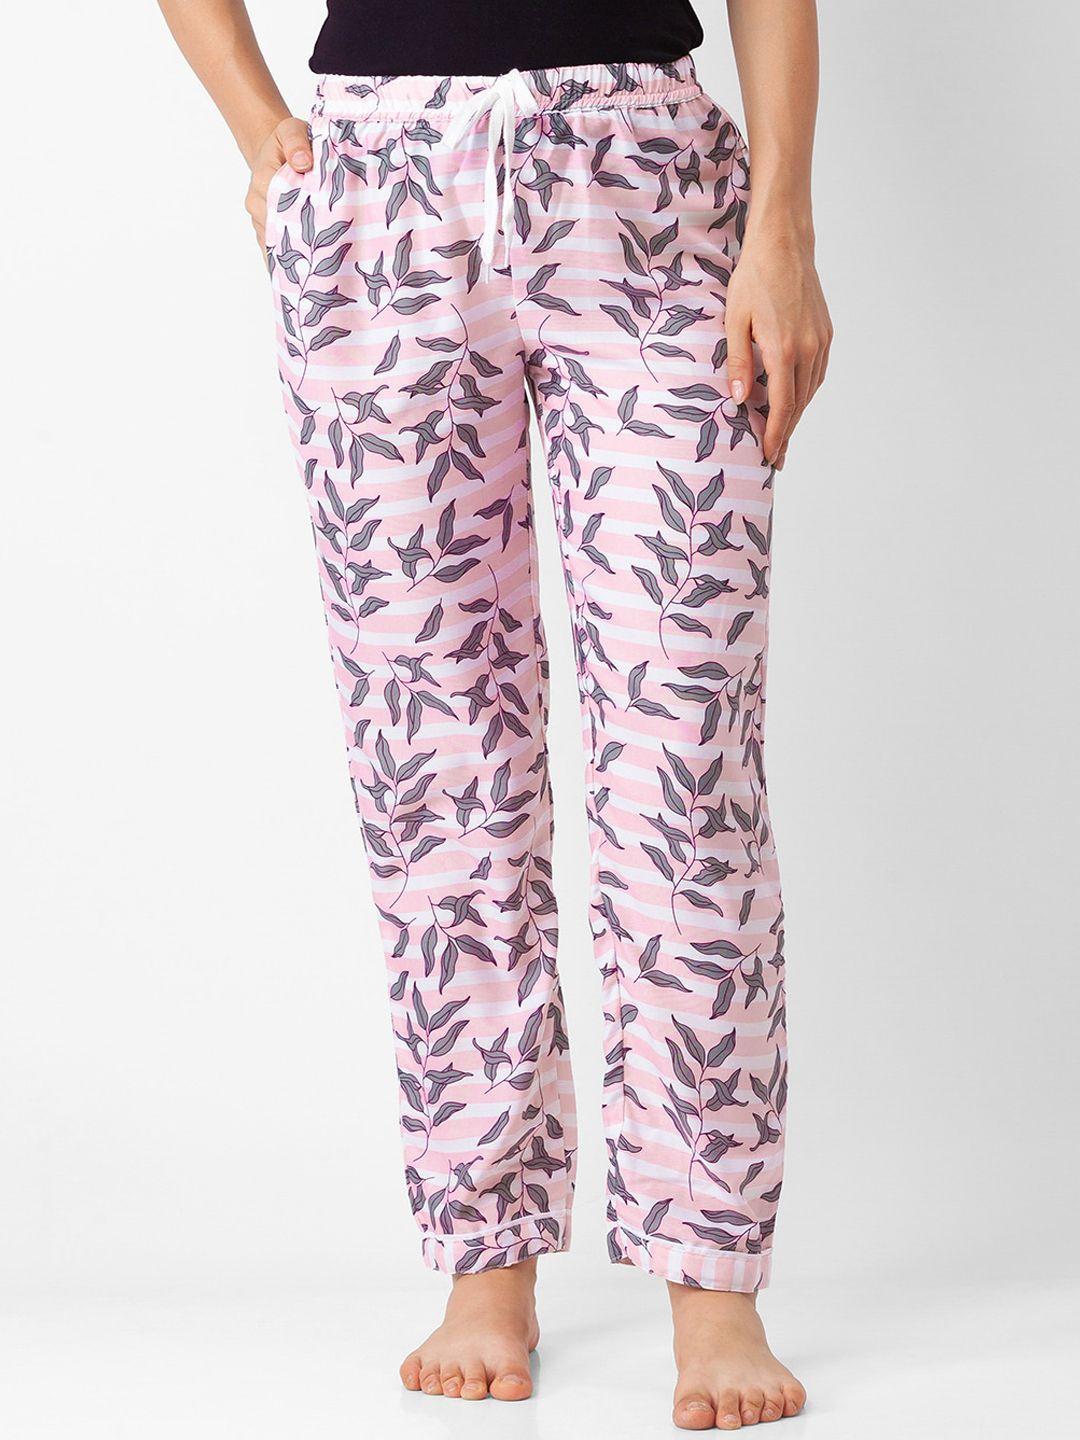 fashionrack women pink printed mid-rise cotton lounge pant